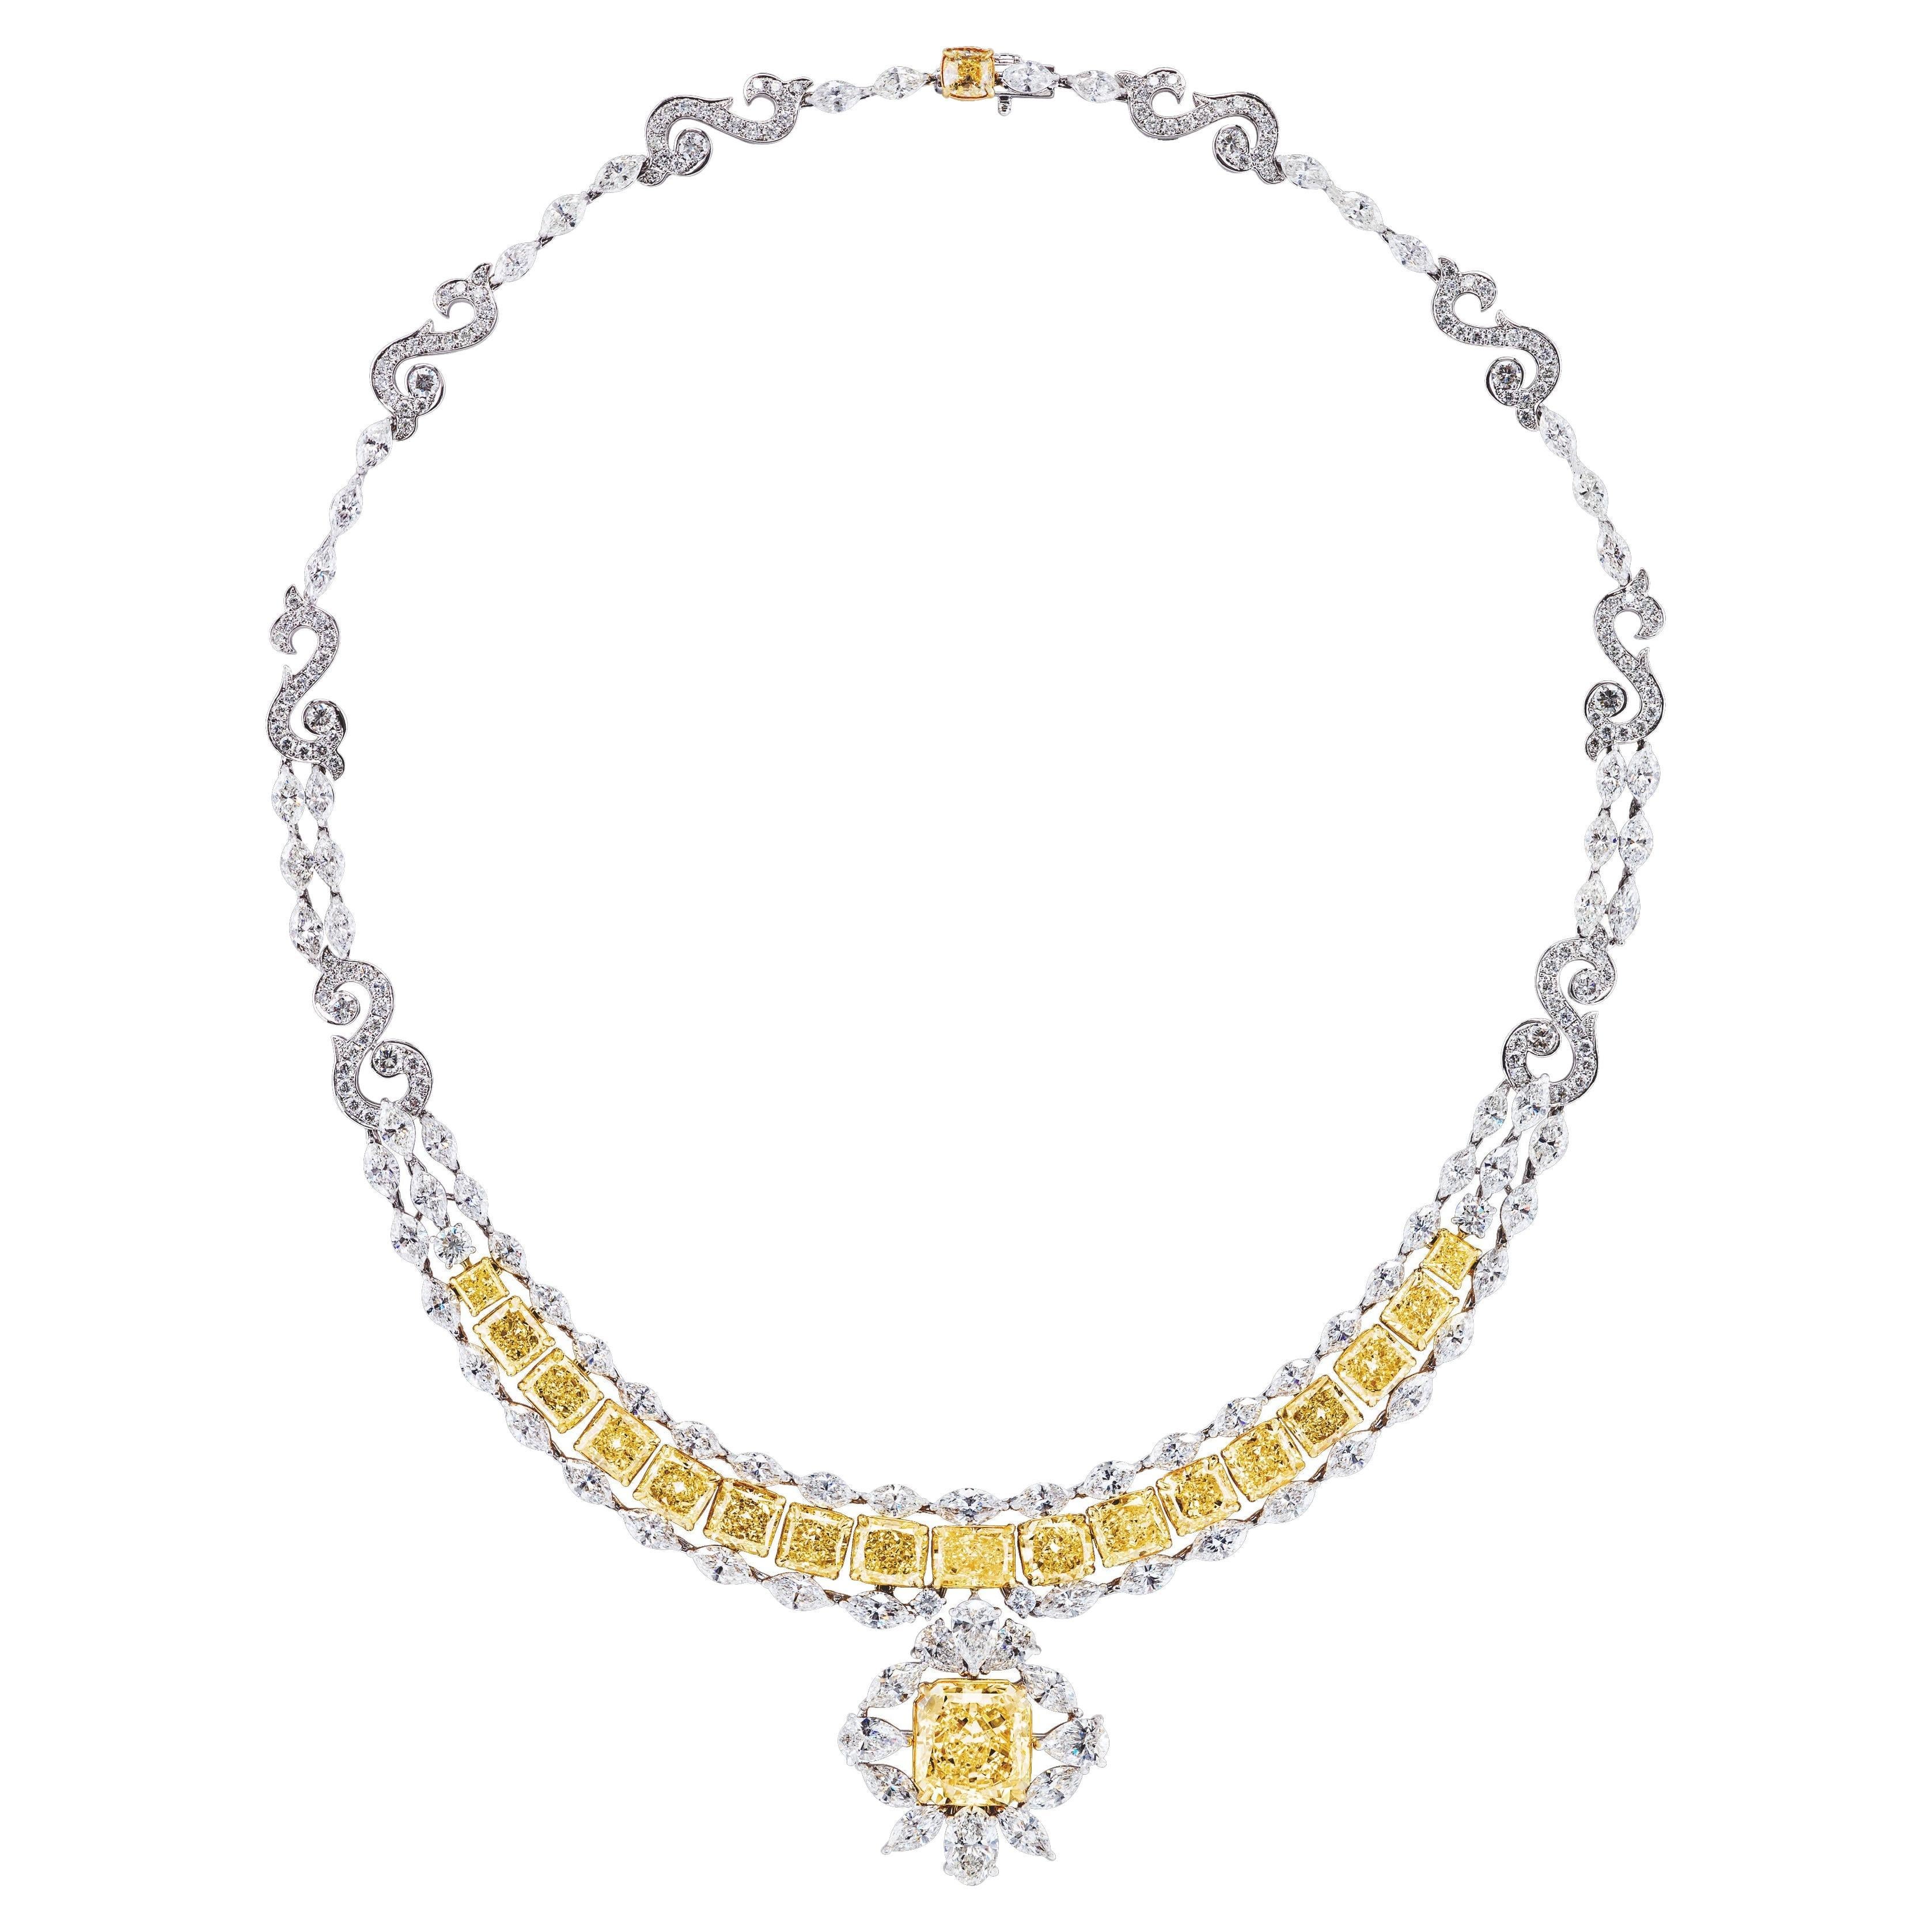 Extraordinary GIA Certified 50 Carat Fancy Yellow Diamond Necklace in 18K Gold